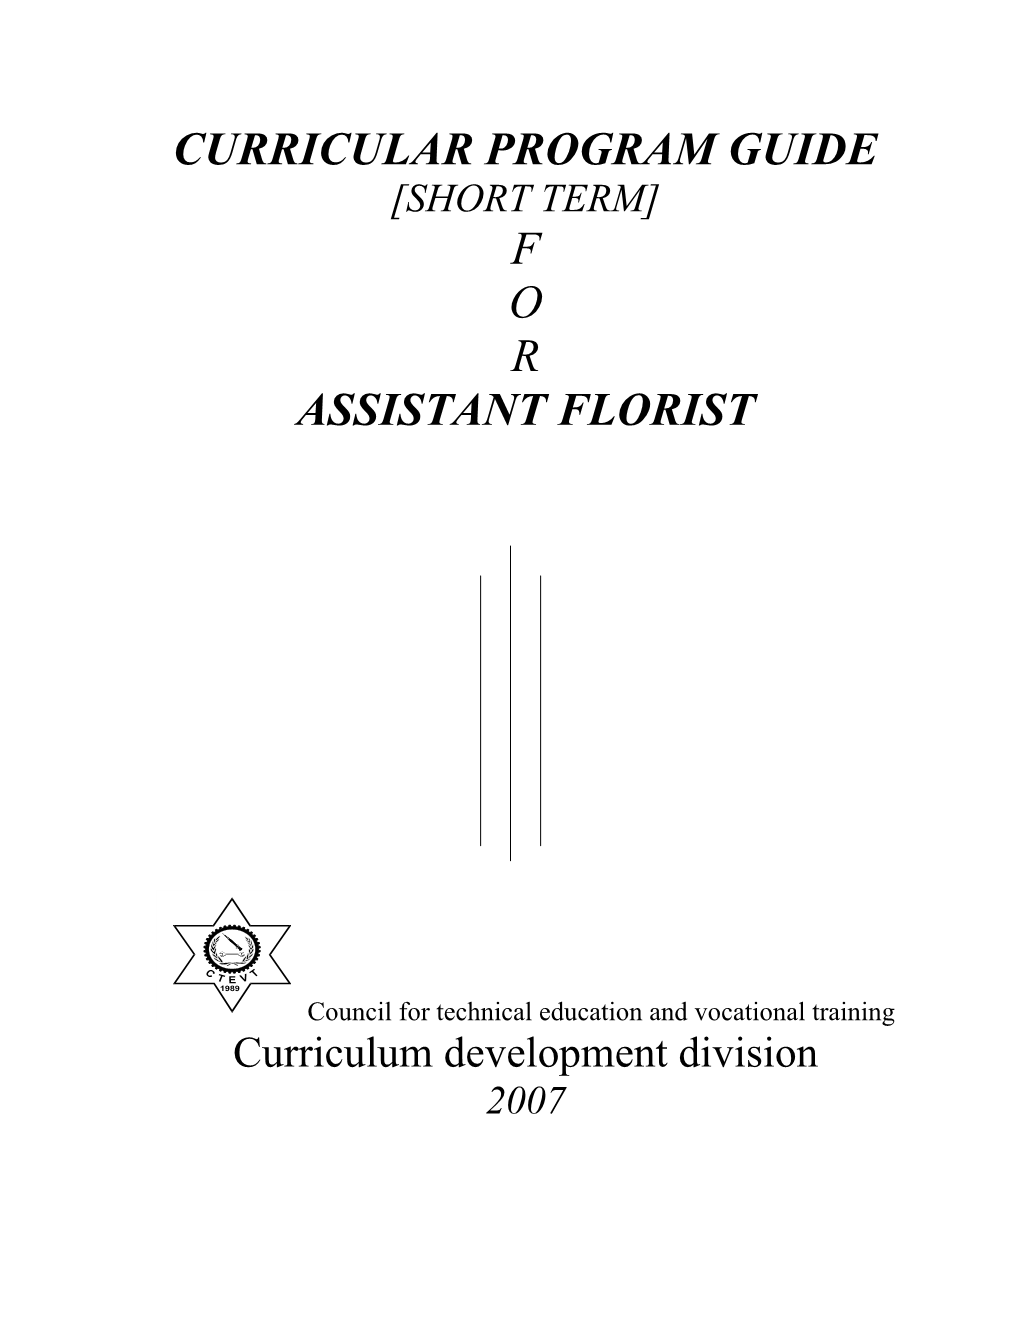 Program Guide [Short Term] F O R Assistant Florist